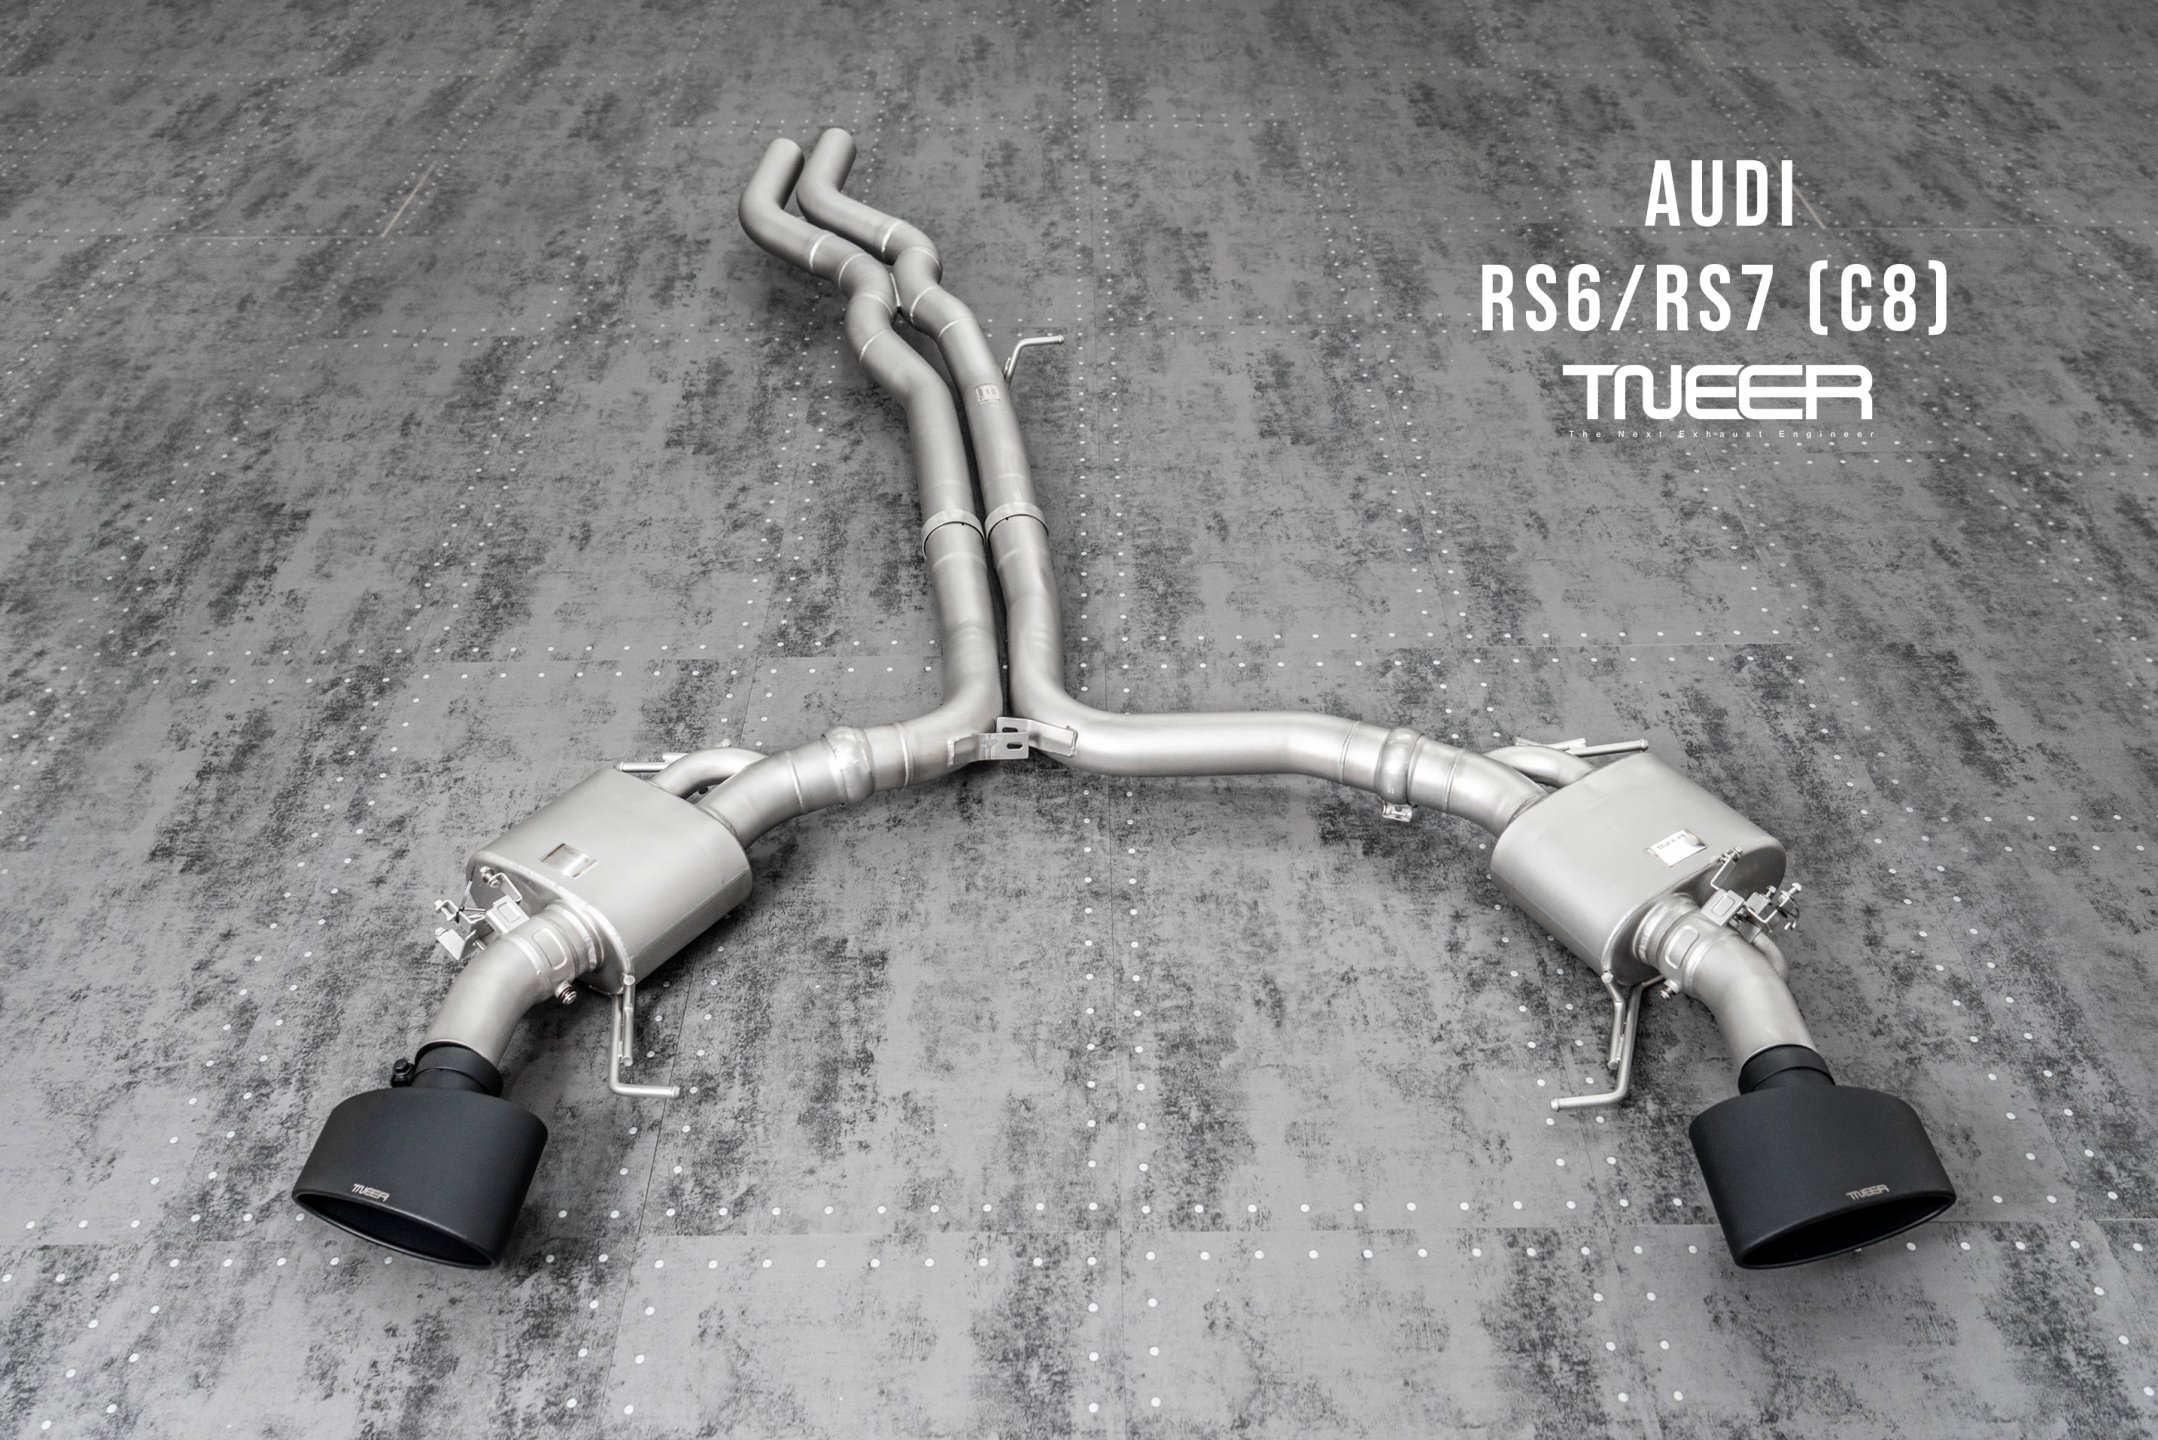 Audi RS6 (C8) 4.0 TFSI V8 TNEER Downpipes